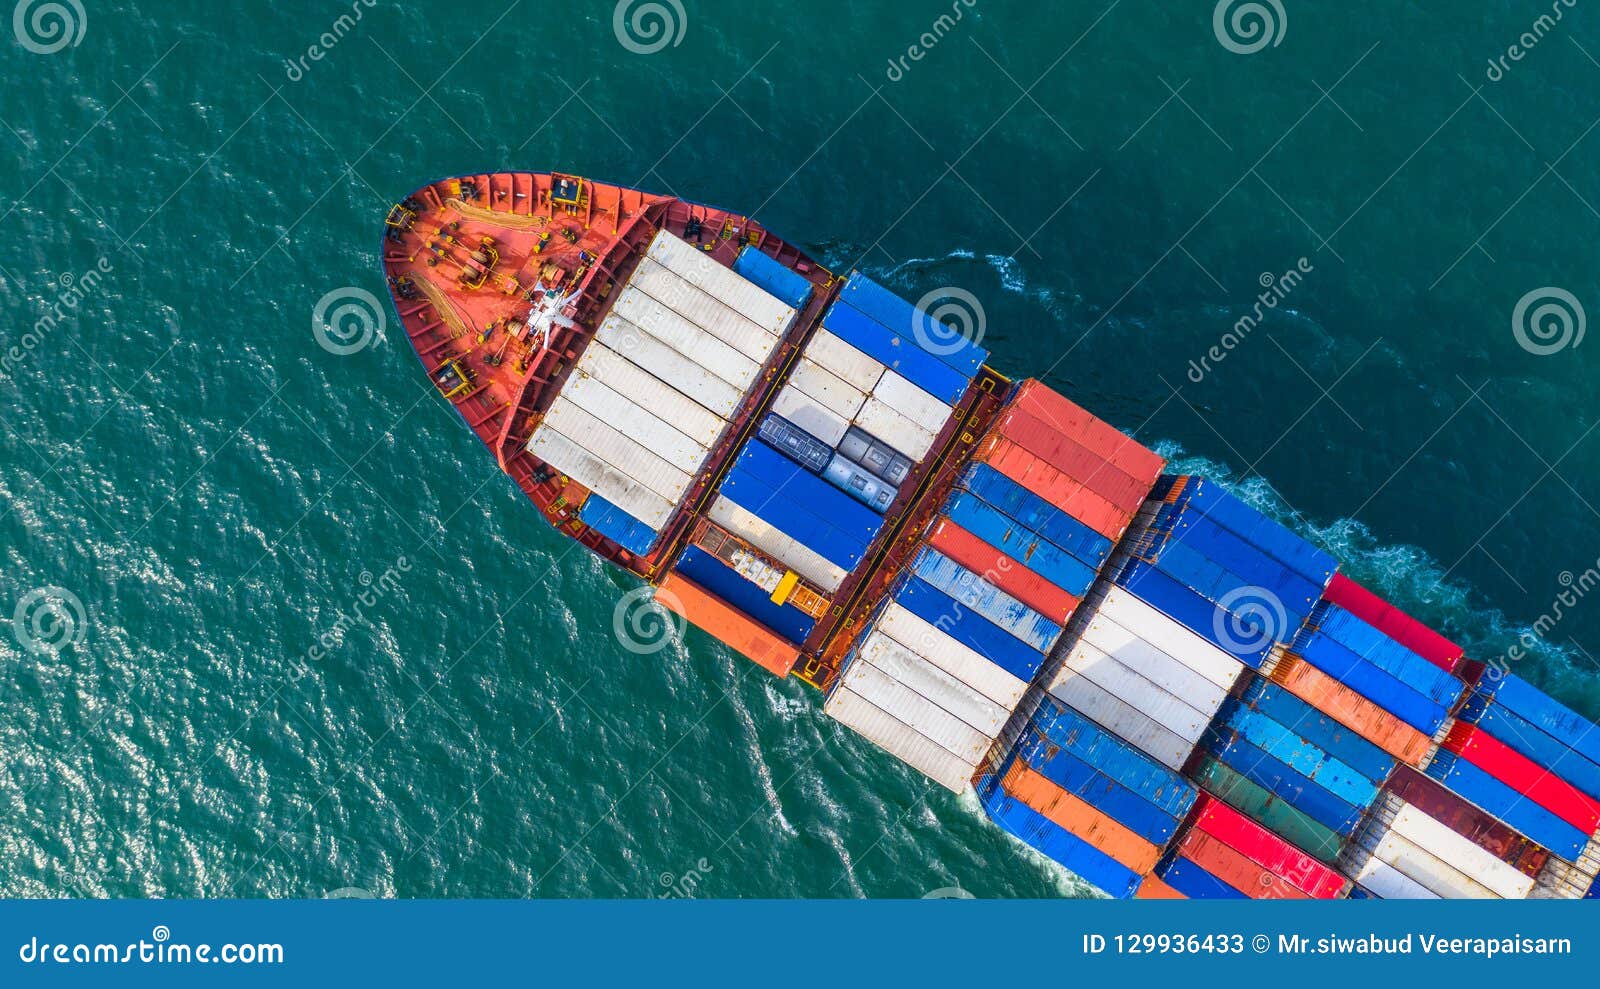 Hviske Reception klasse Aerial Top View Cargo Vessel, Container Vessel in Export and Imp Stock  Image - Image of port, crane: 129936433